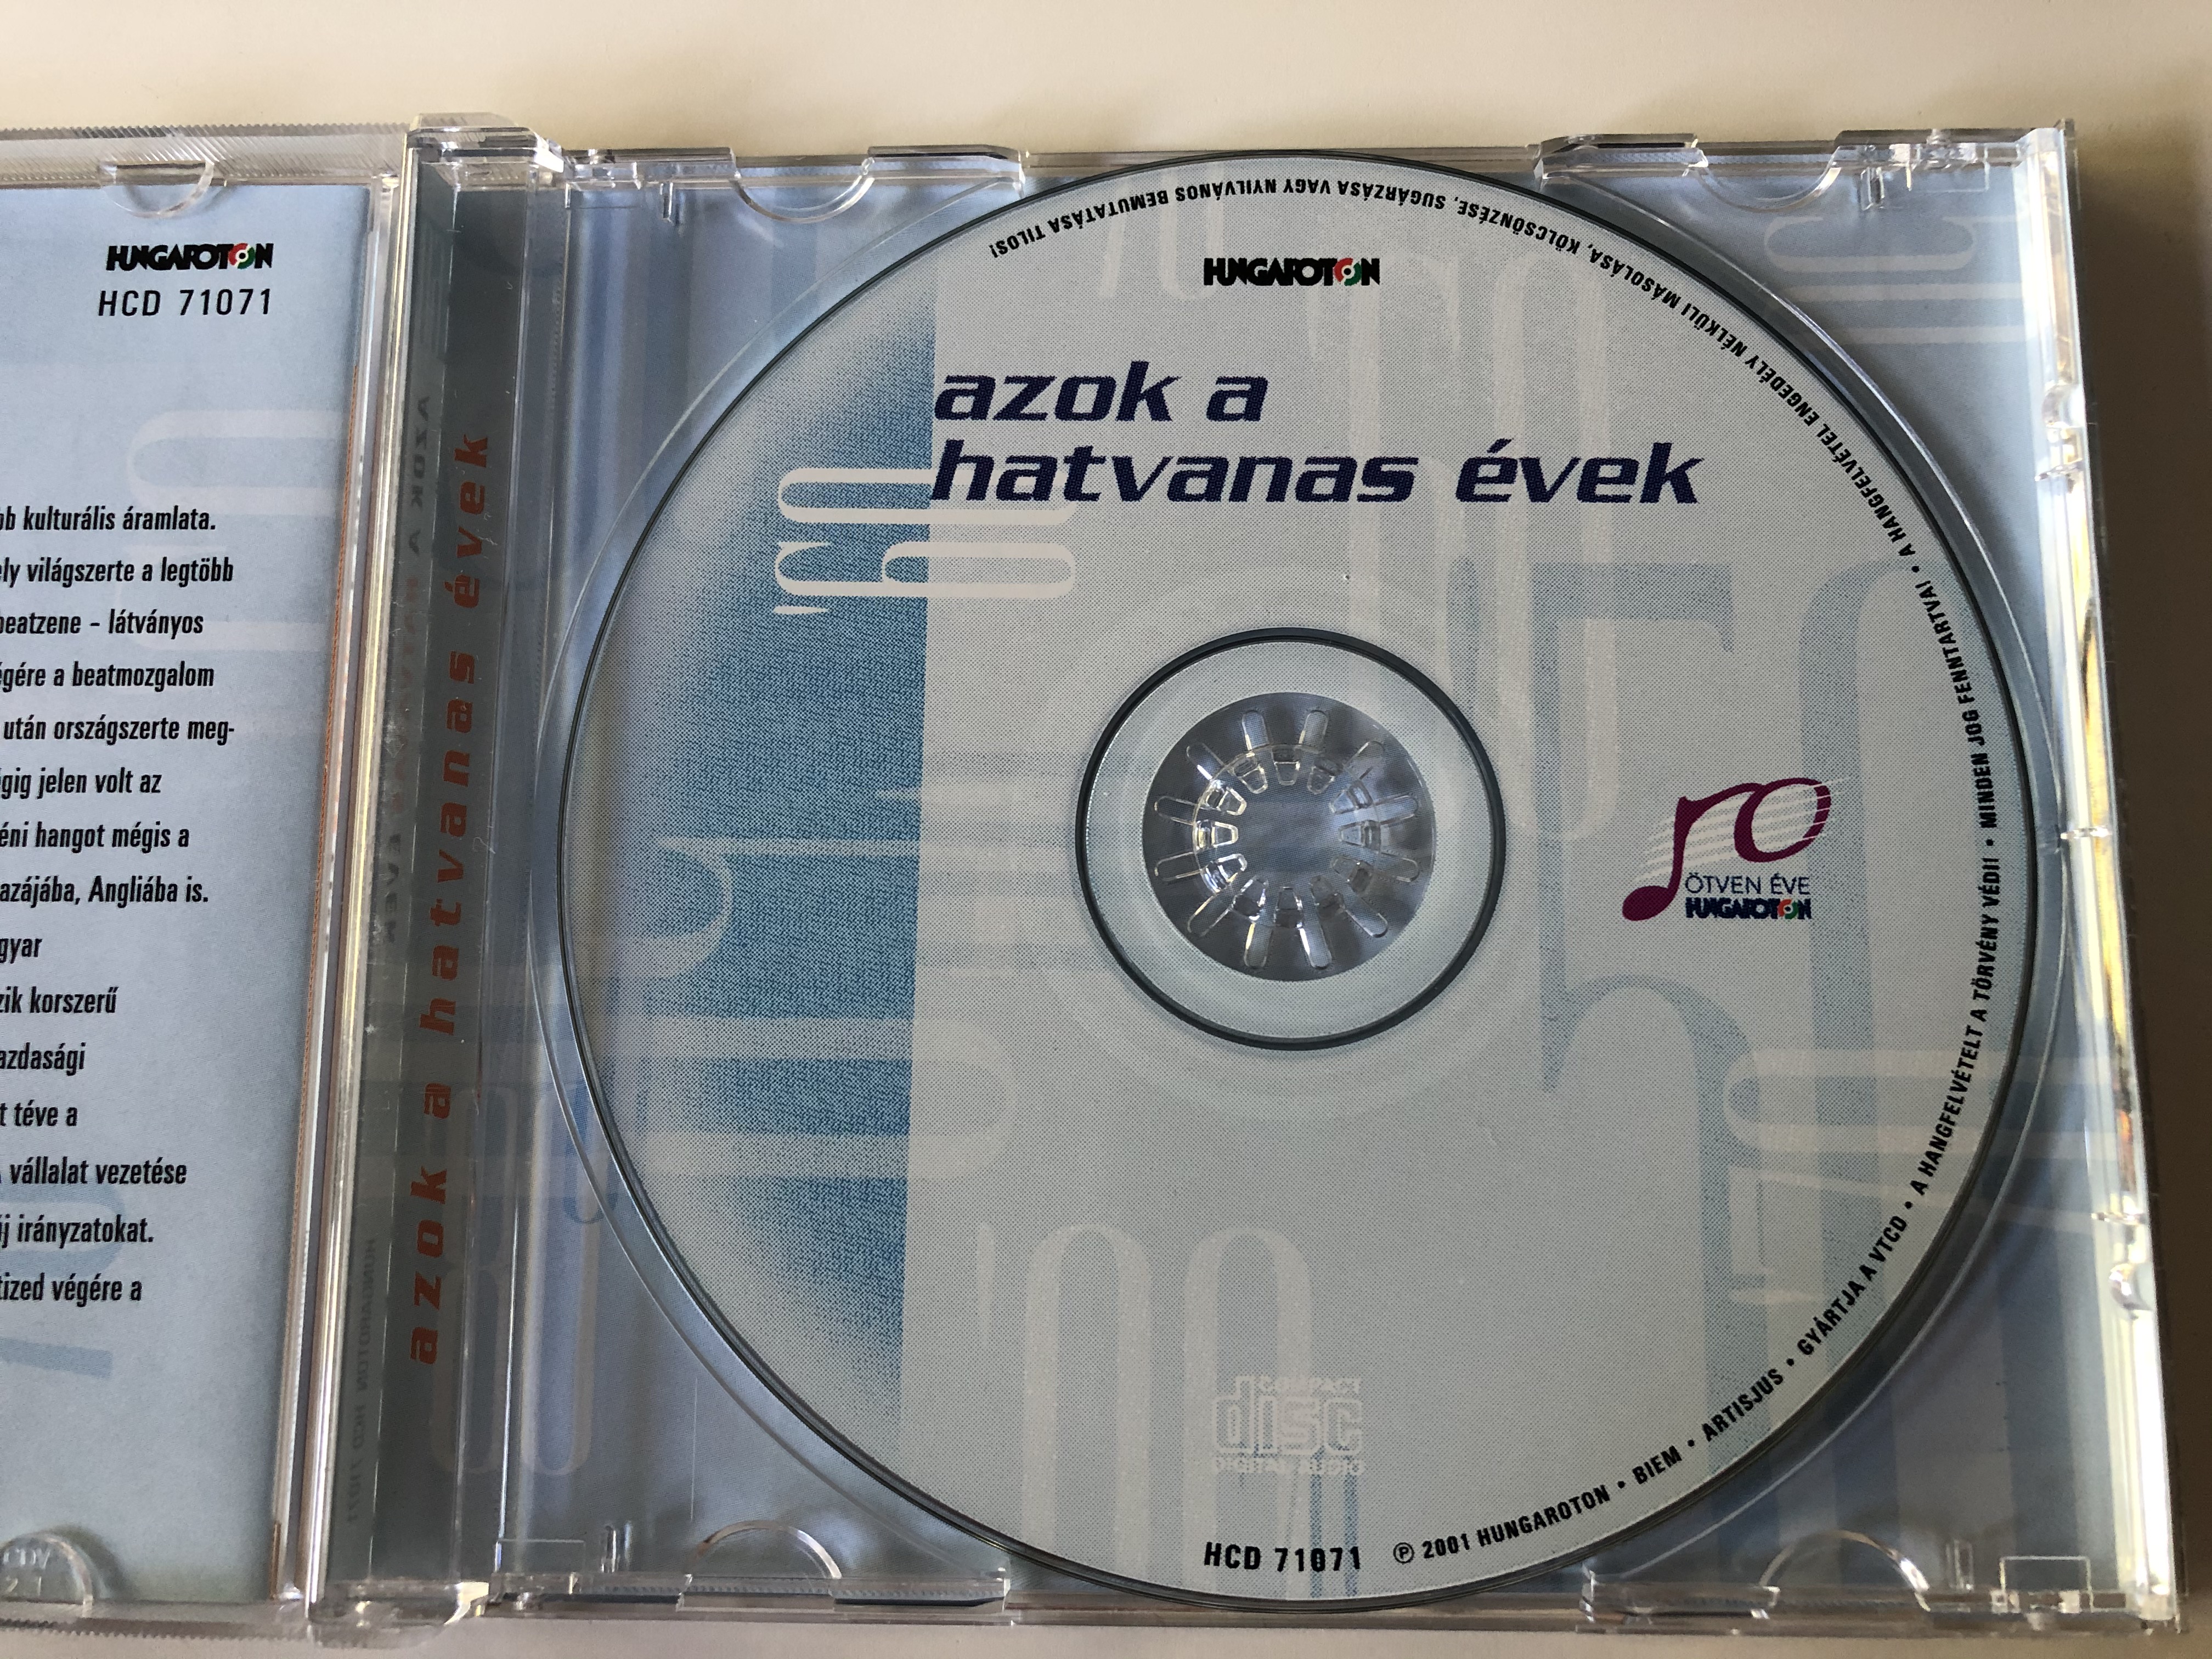 azok-a-hatvanas-vek-60-hungaroton-audio-cd-2001-hcd-71071-6-.jpg